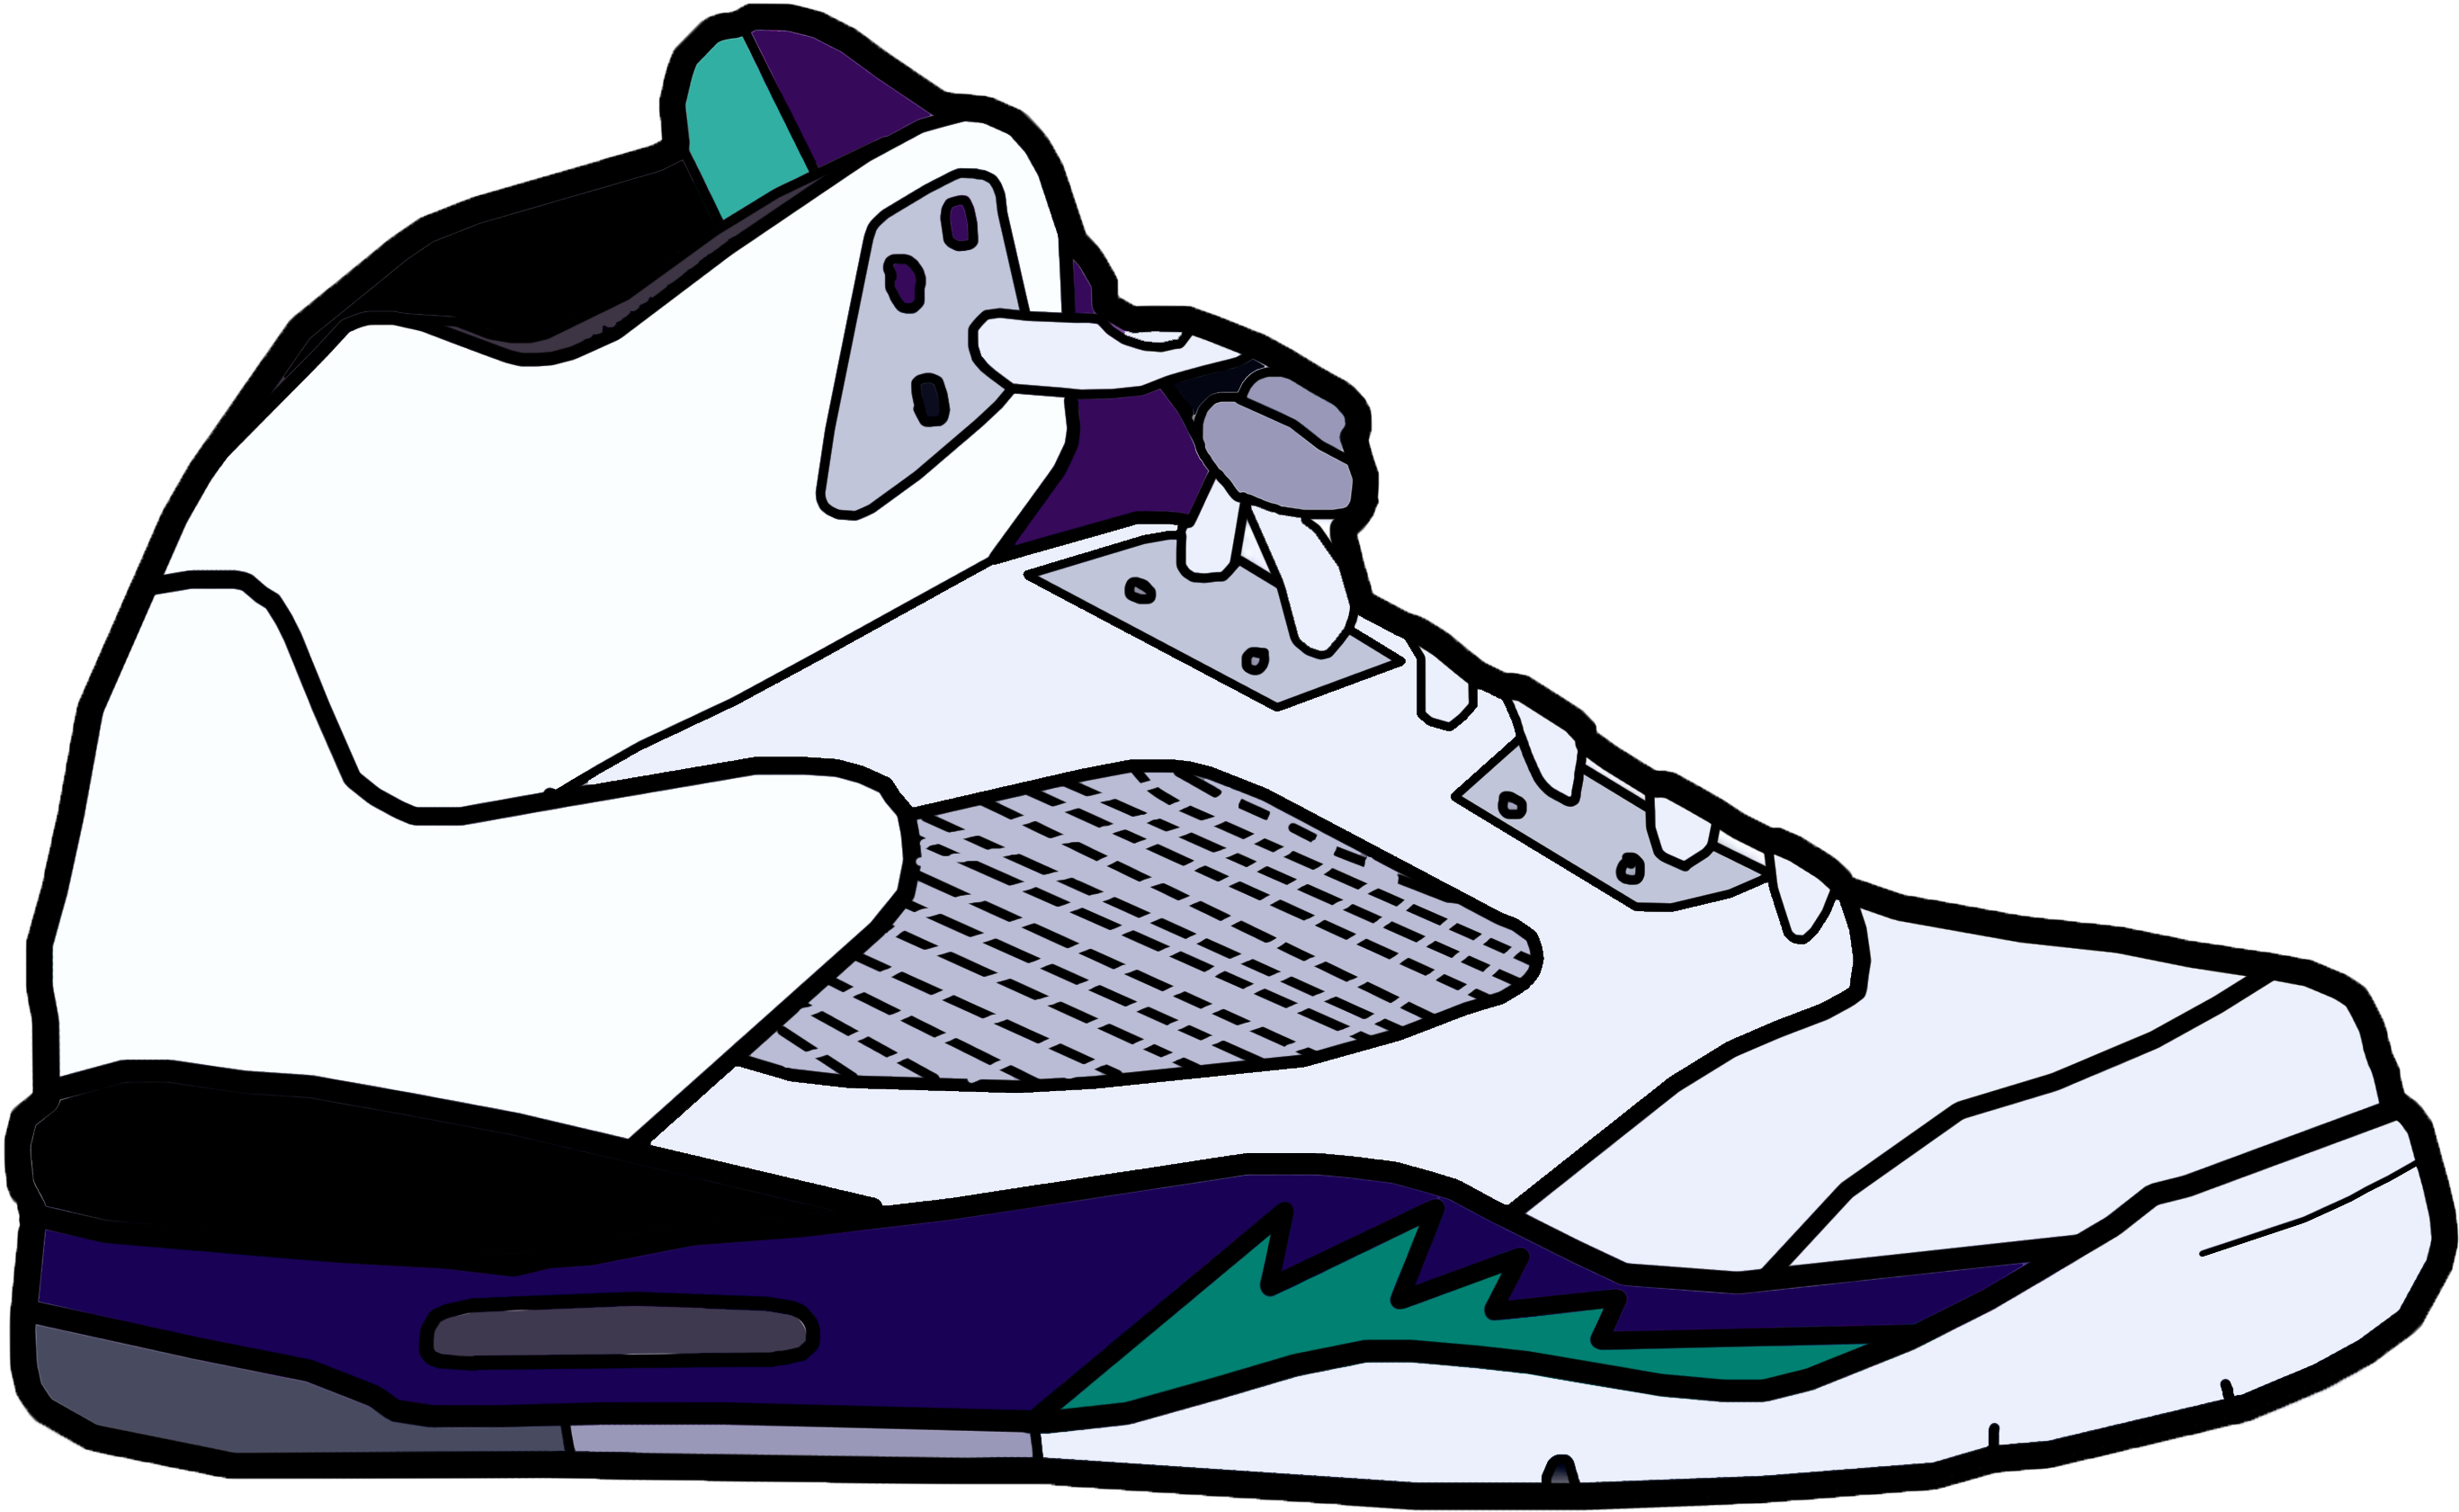 share clipart about Grape Sketch - Cartoon Jordan Shoes, Find more high qua...